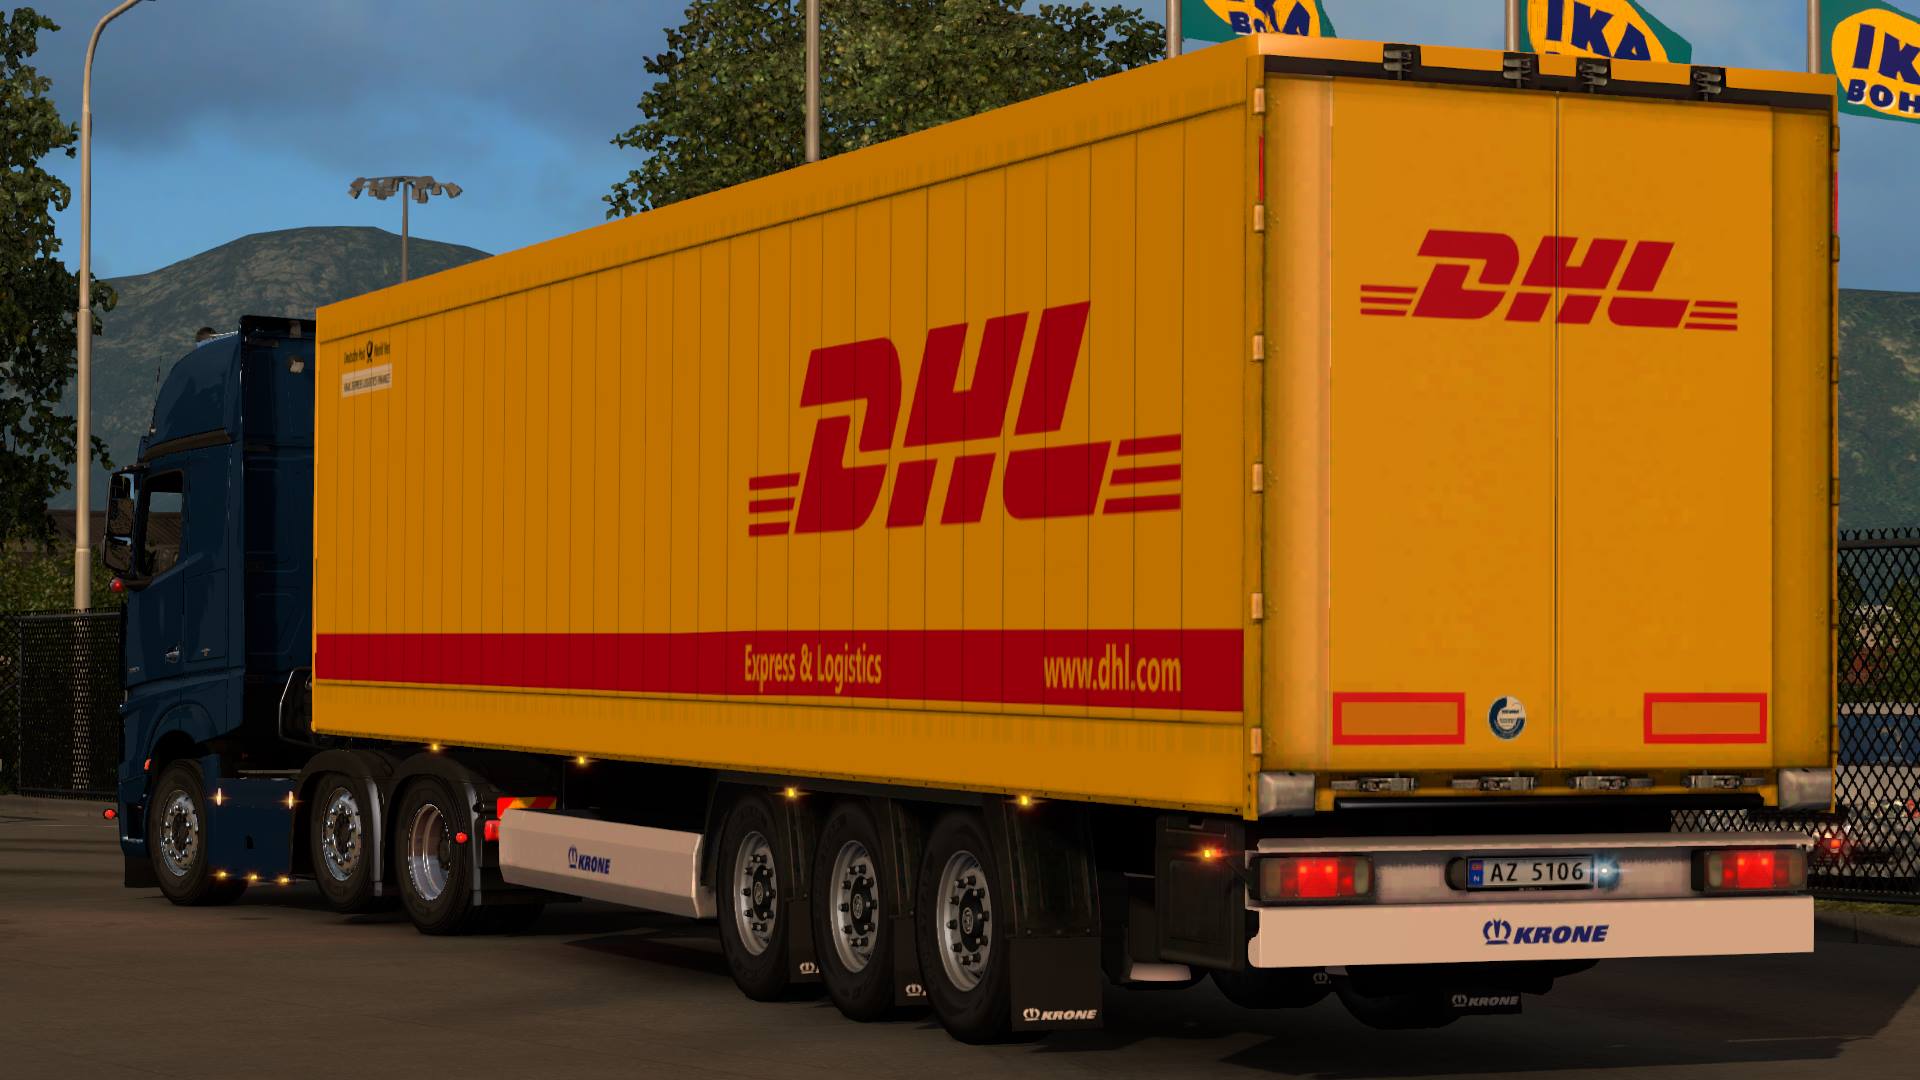 Euro truck simulator v1 2 patch download